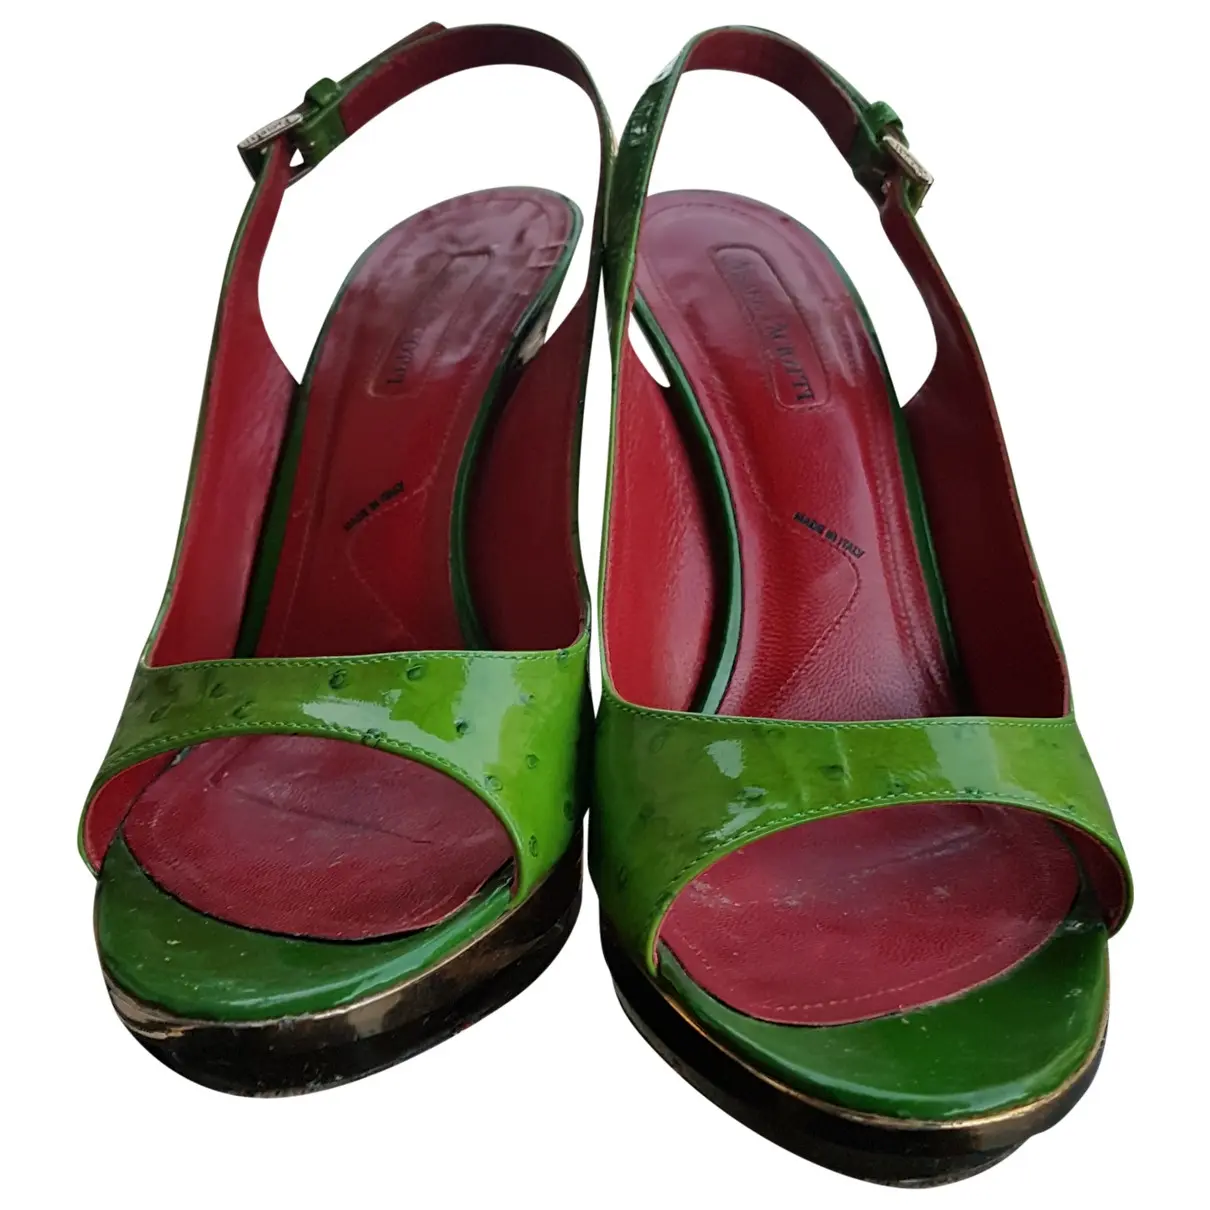 Patent leather sandals Cesare Paciotti